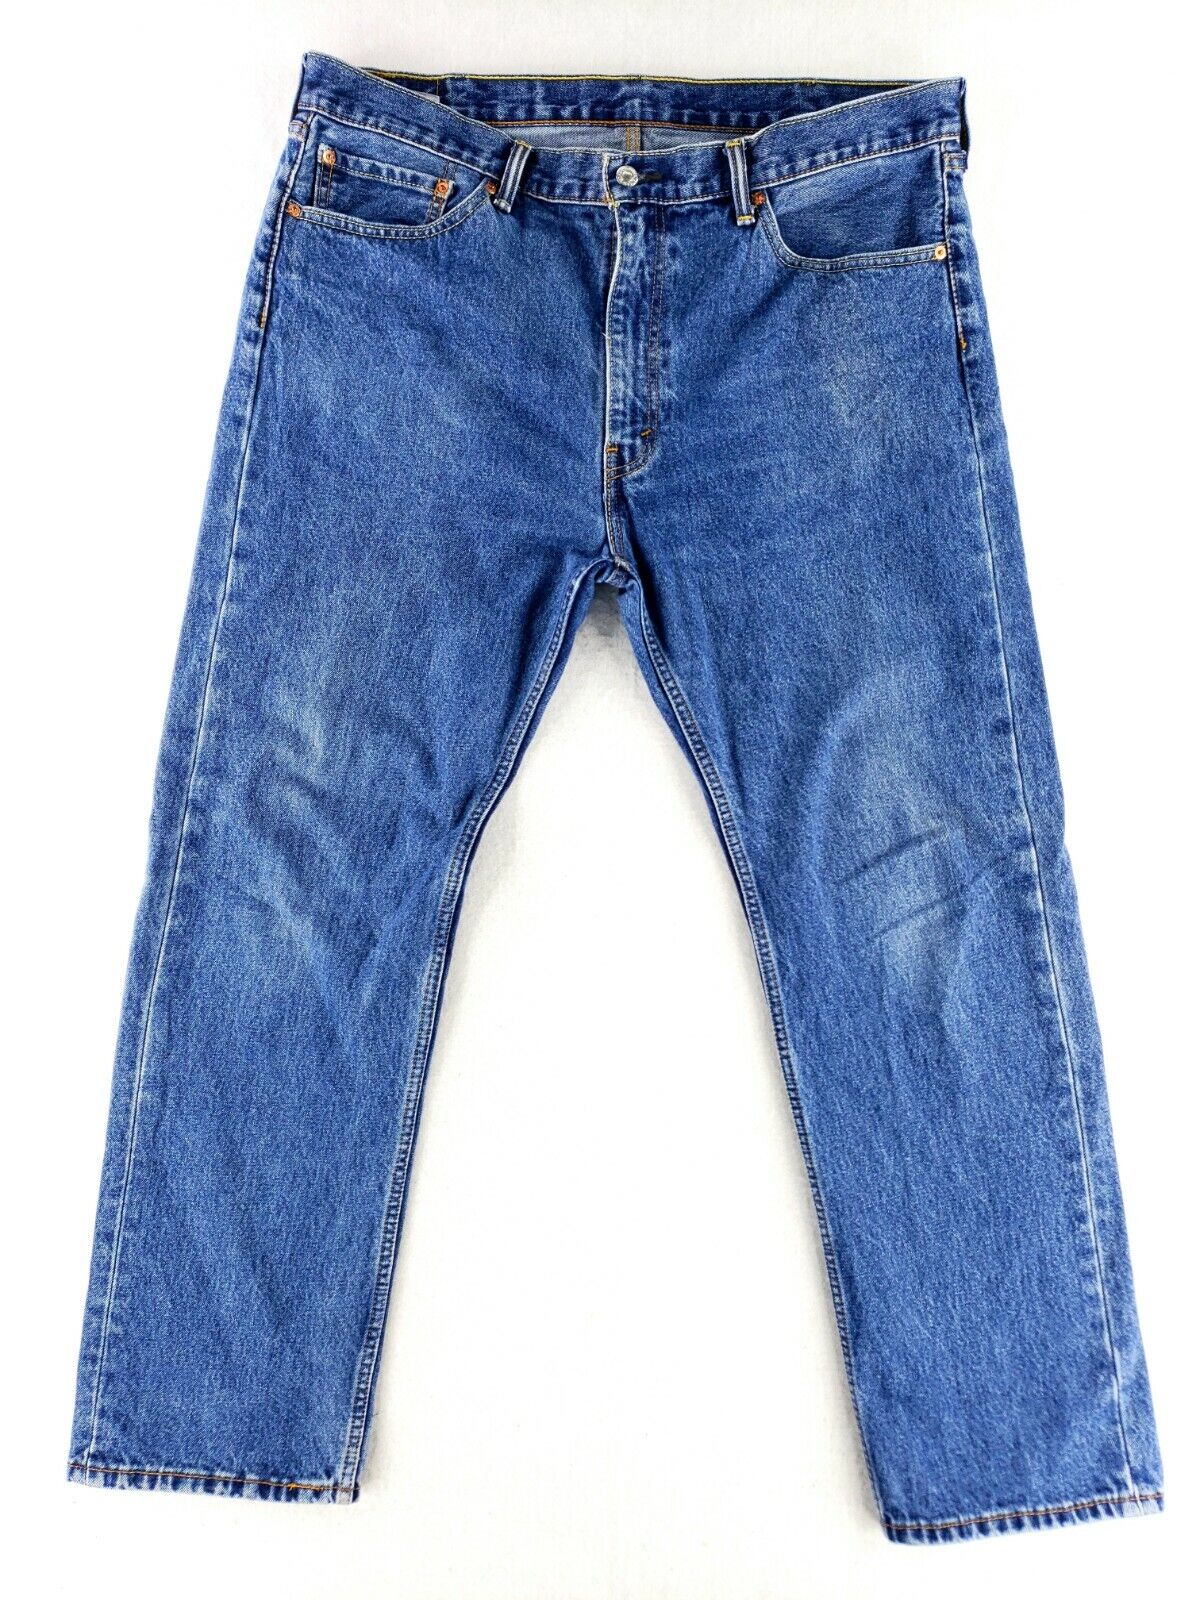 Levi's 505 Regular Fit 40x32 Blue Jeans Classic Heavy Denim